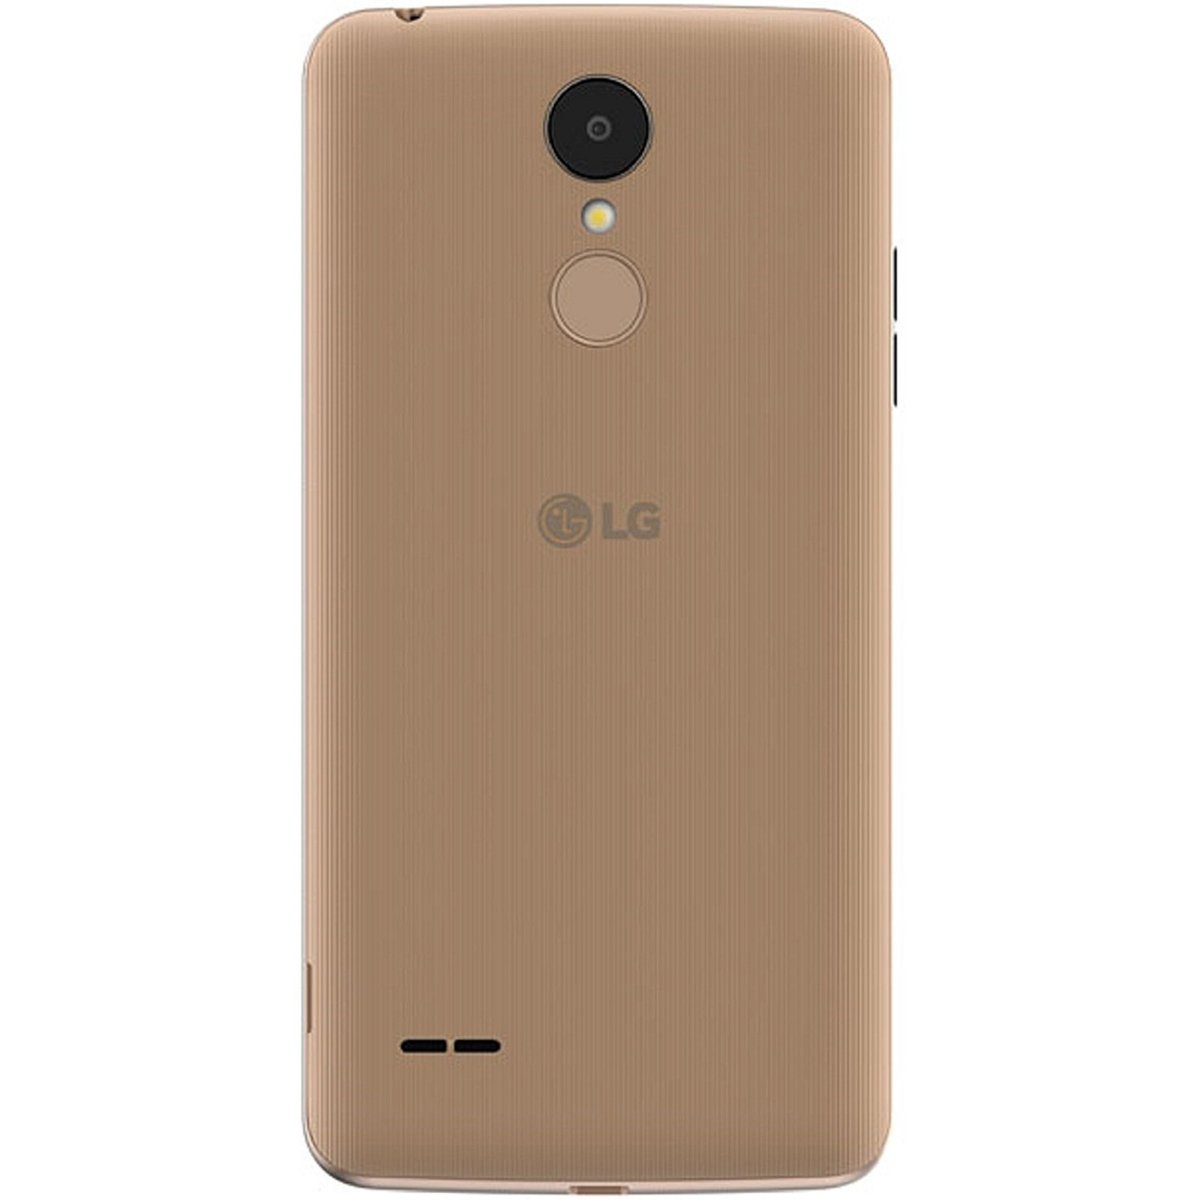 LG K8 (2017) 16GB 4G Gold